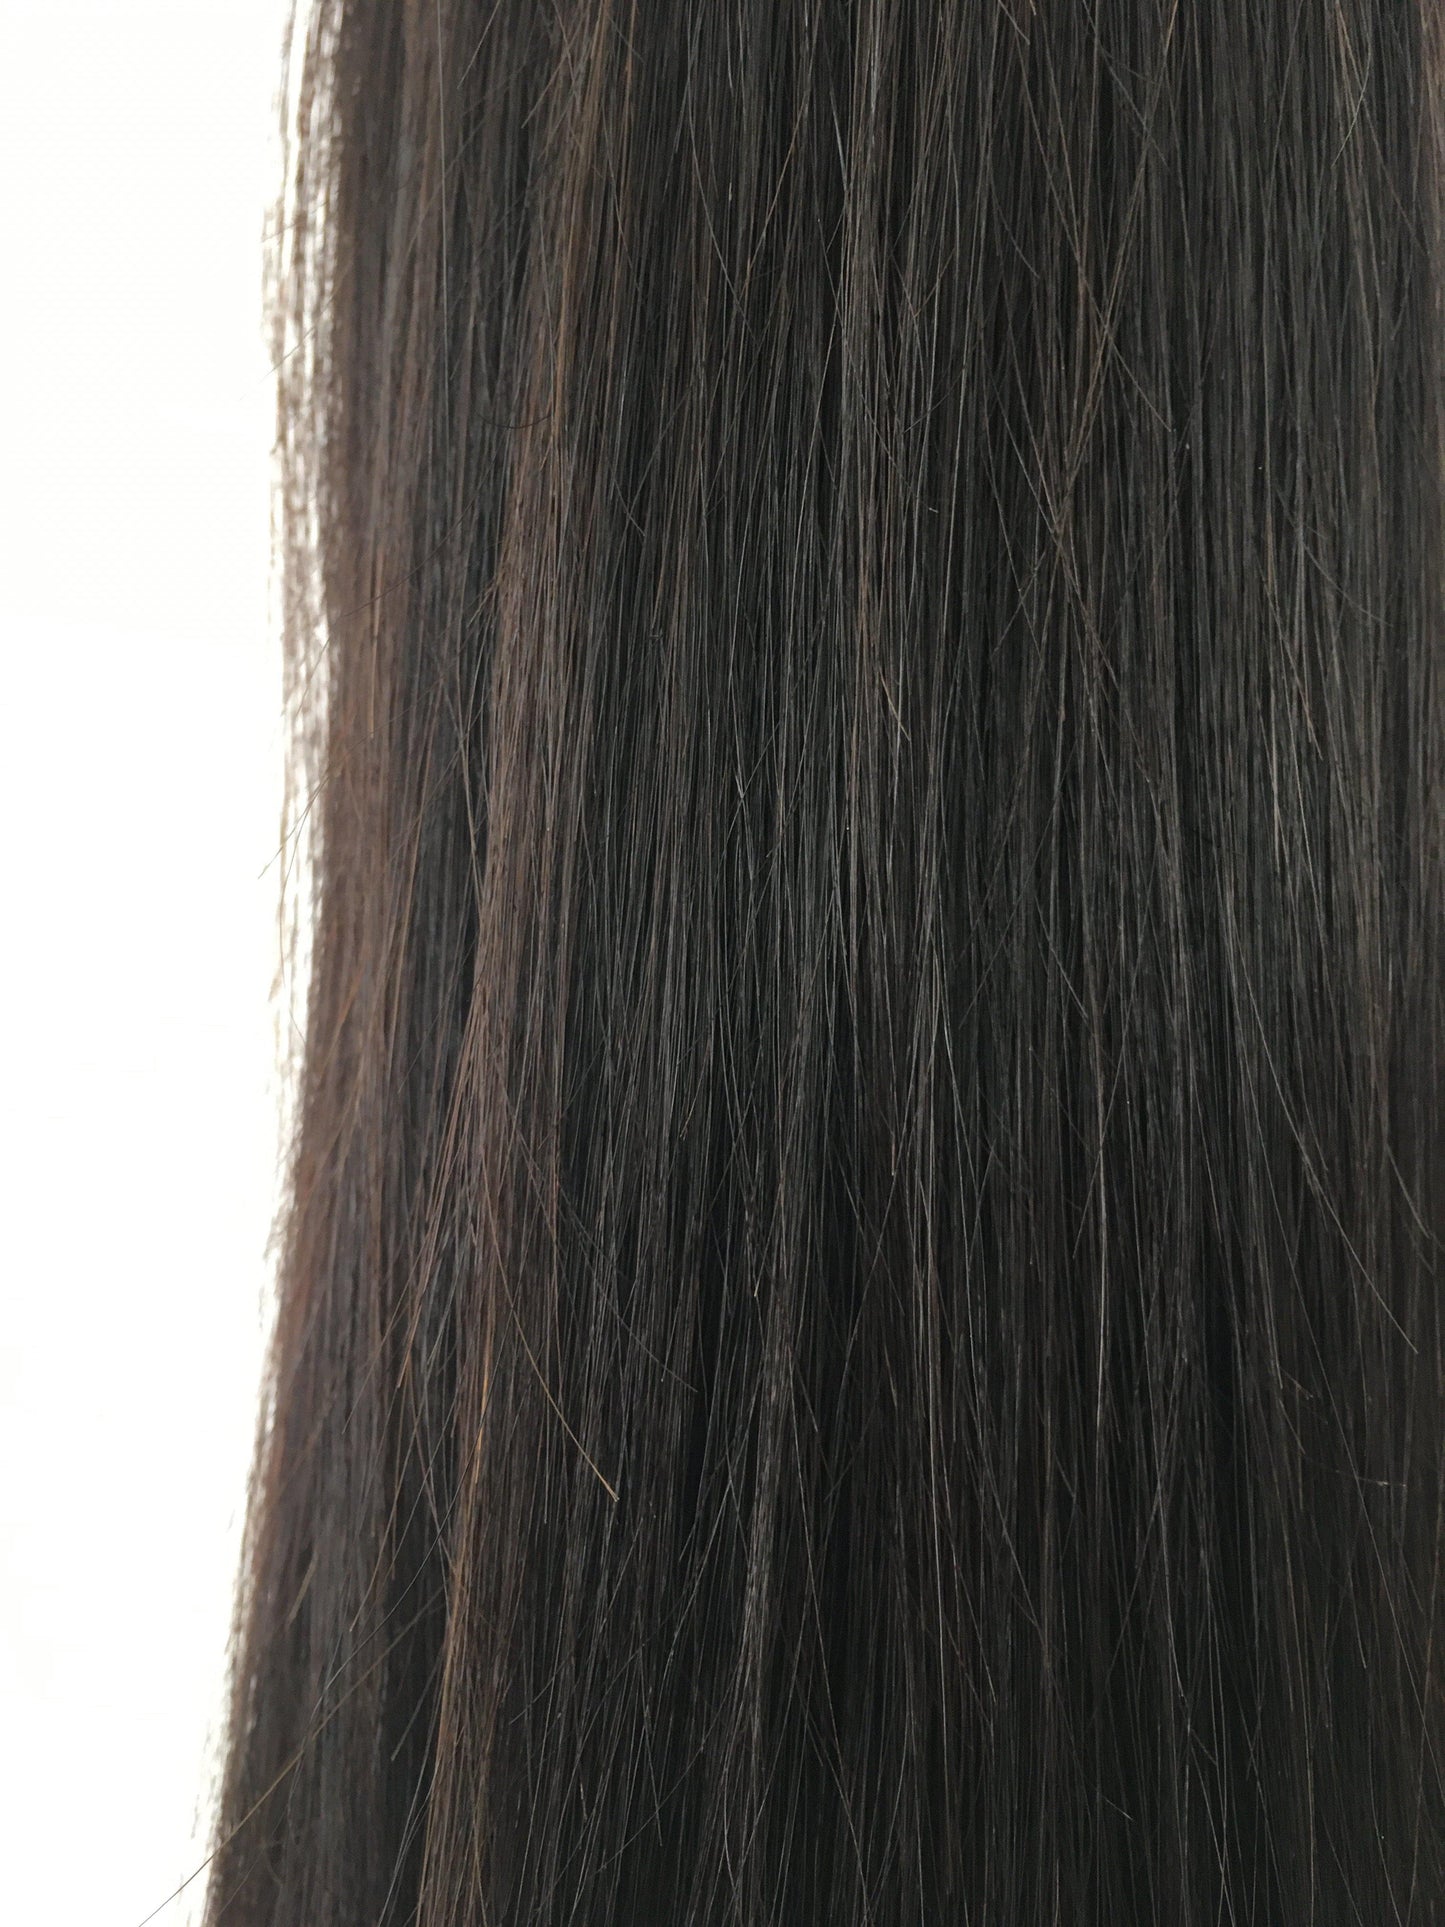 Brazilian Virgin Remy Human Hair, Nano Ring Extensions, Straight, 24'', Virgin Uncoloured. Quick Shipping!-Virgin Hair & Beauty, The Best Hair Extensions, Real Virgin Human Hair.